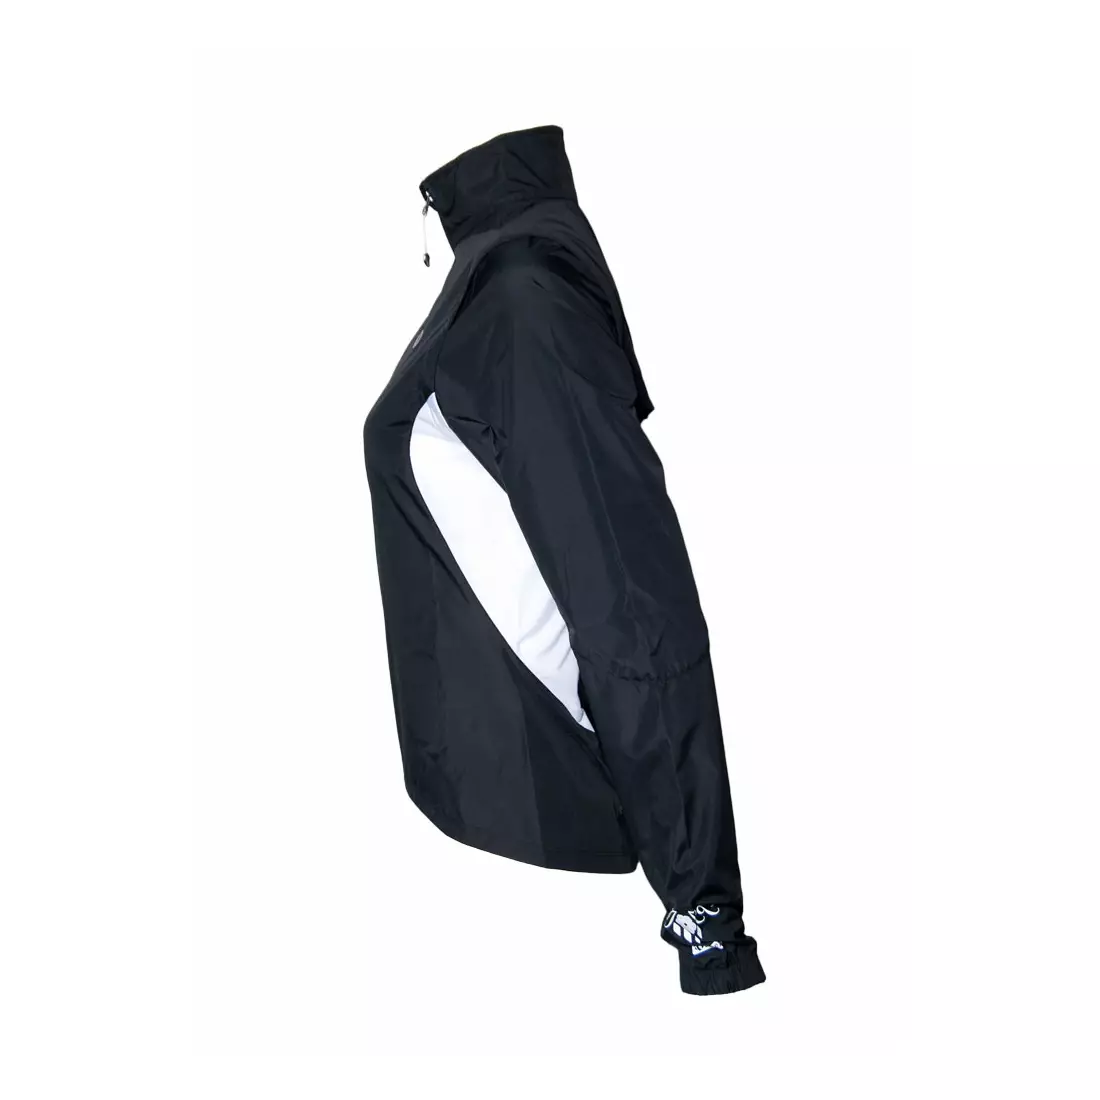 PEARL IZUMI - W's SELECT Barrier Convertible 11231216-021 - women's jacket-vest, color: Black